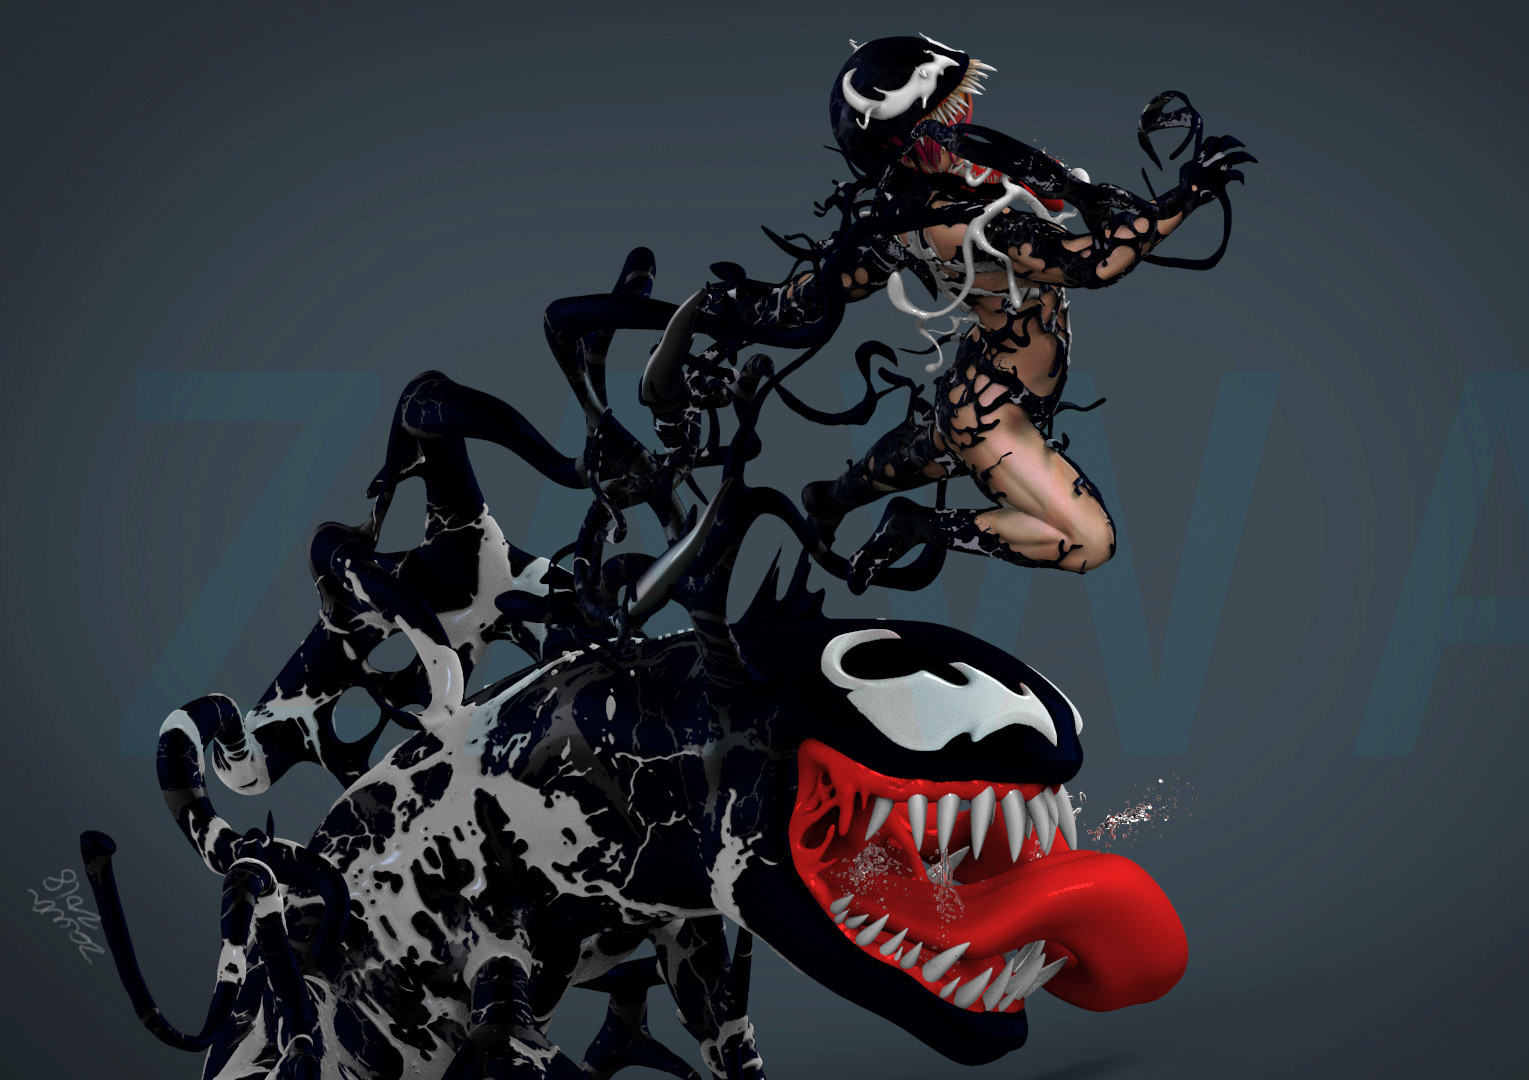 She-Venom.